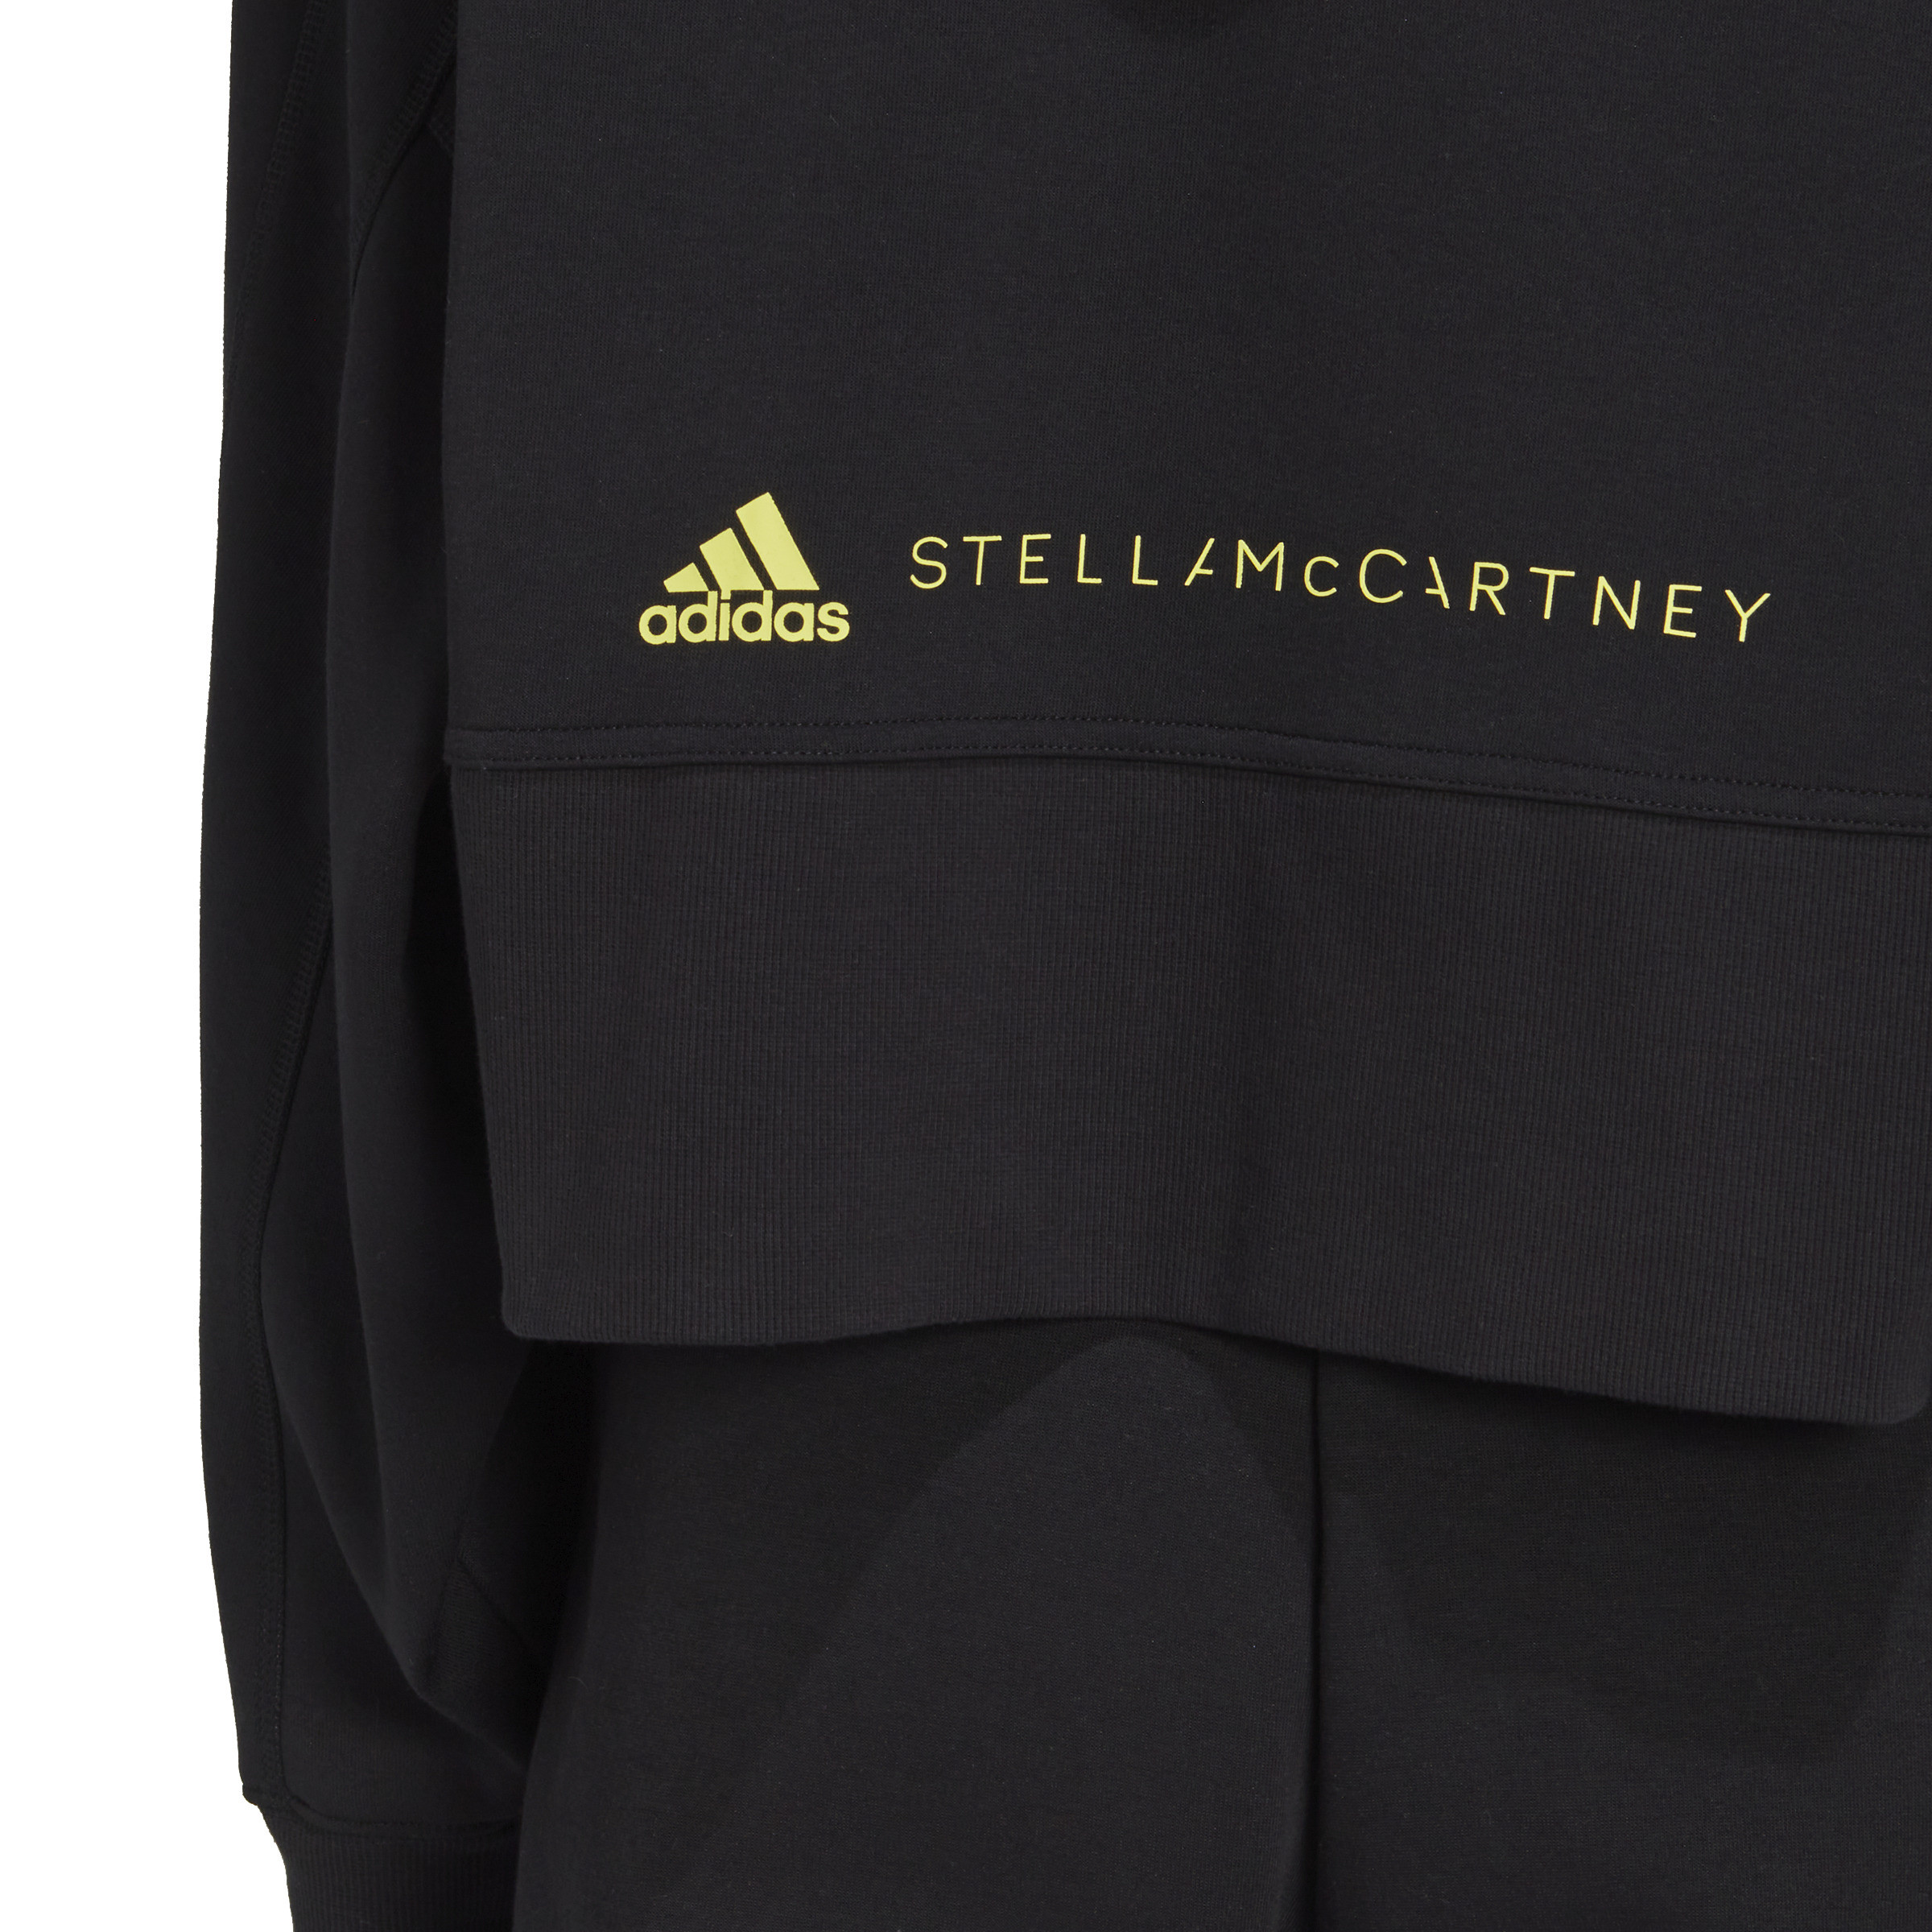 Adidas by Stella McCartney - Felpa cropped con cappuccio, Nero, large image number 1